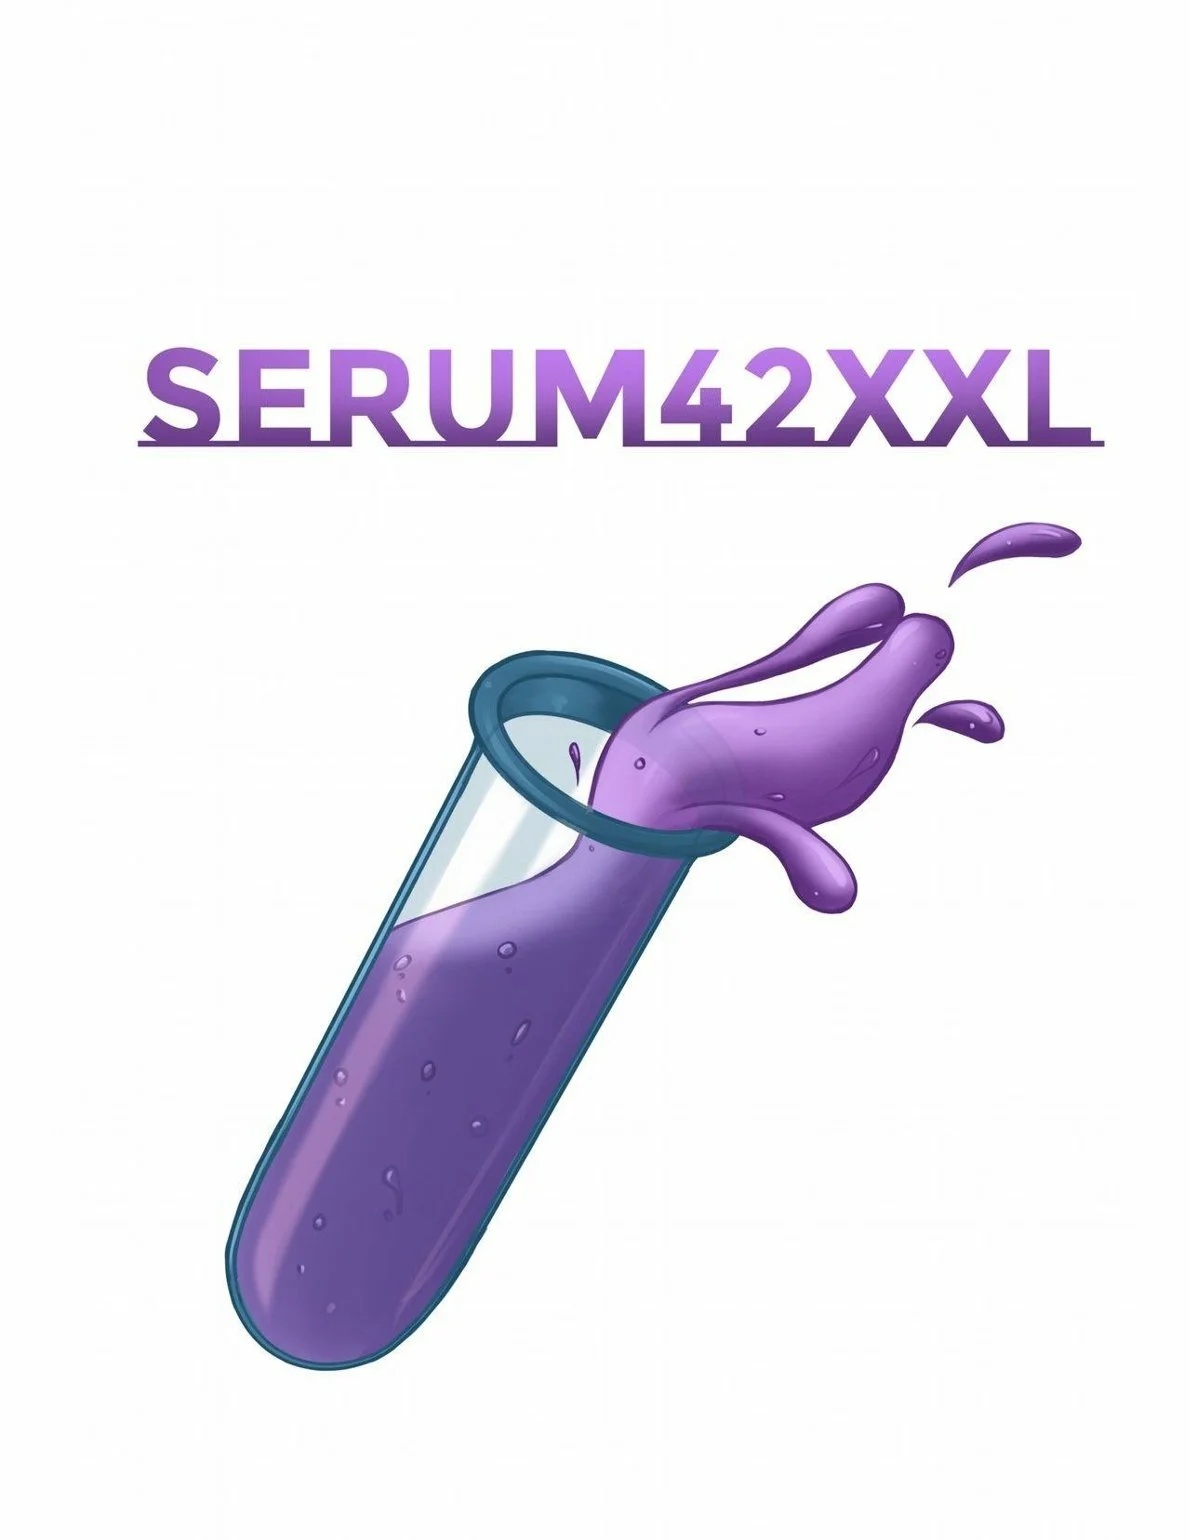 Serum42XXL (completo) - 9